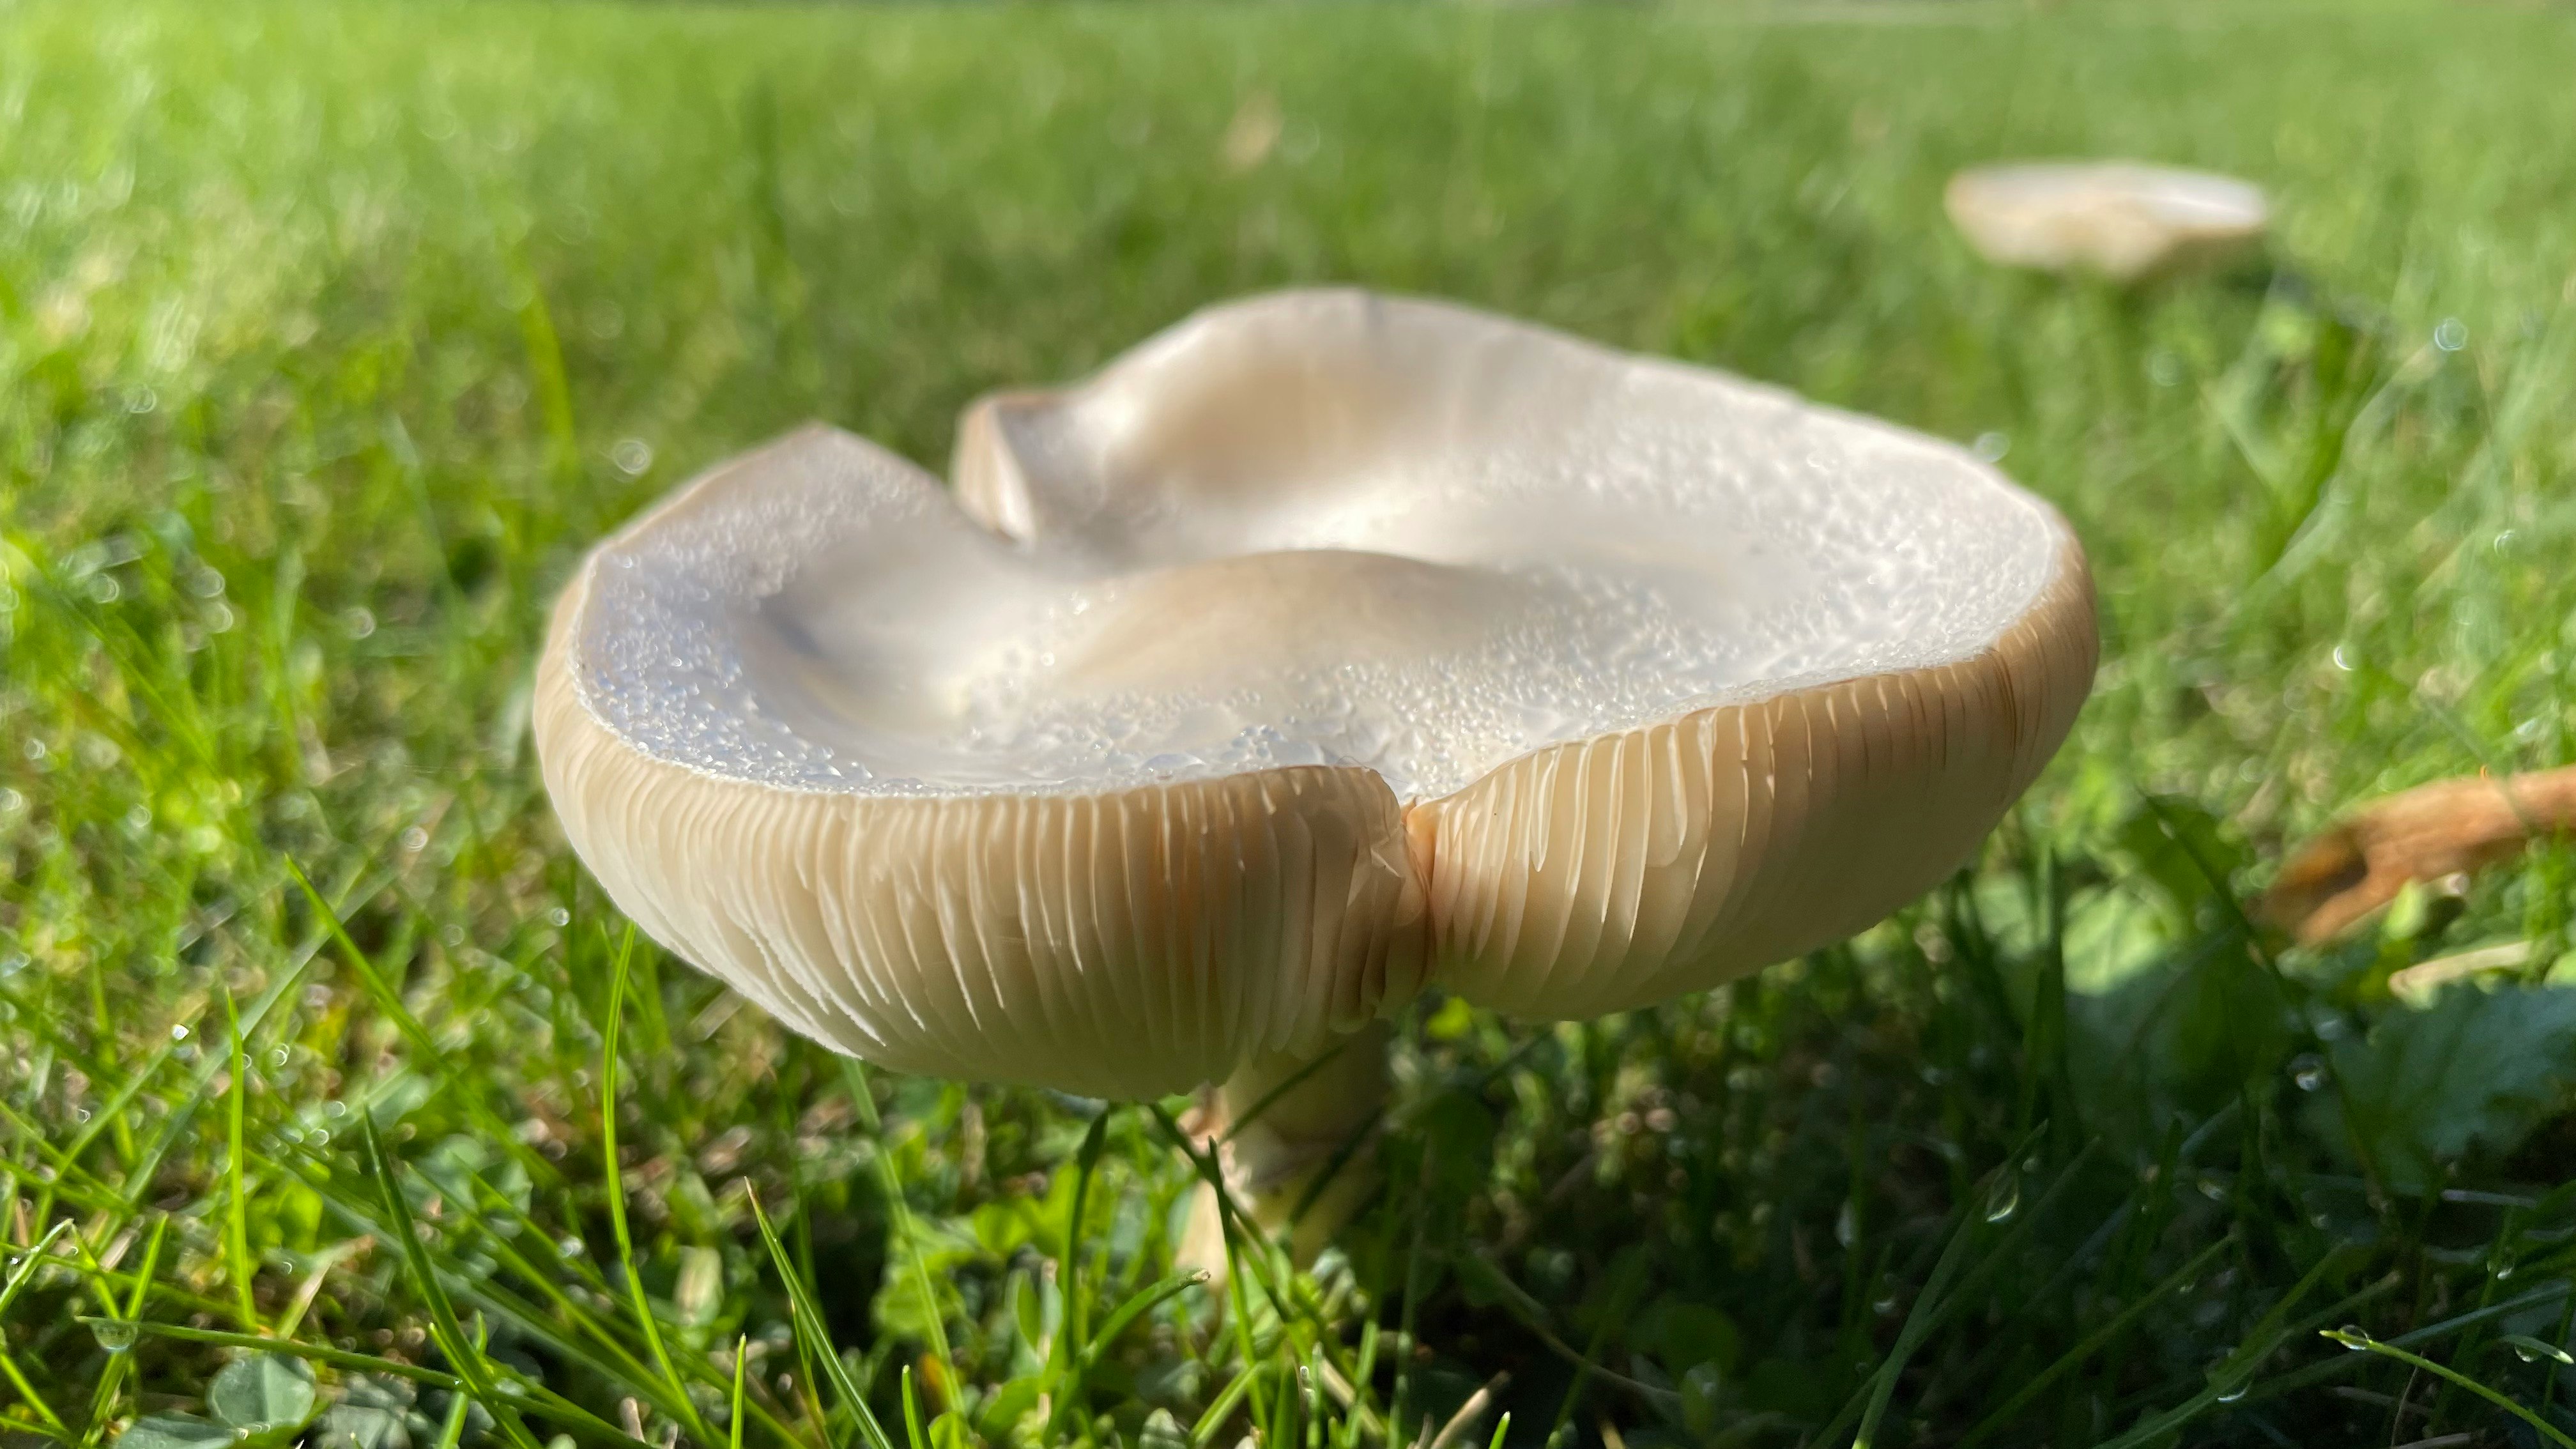 Champignon mushroom on lawn